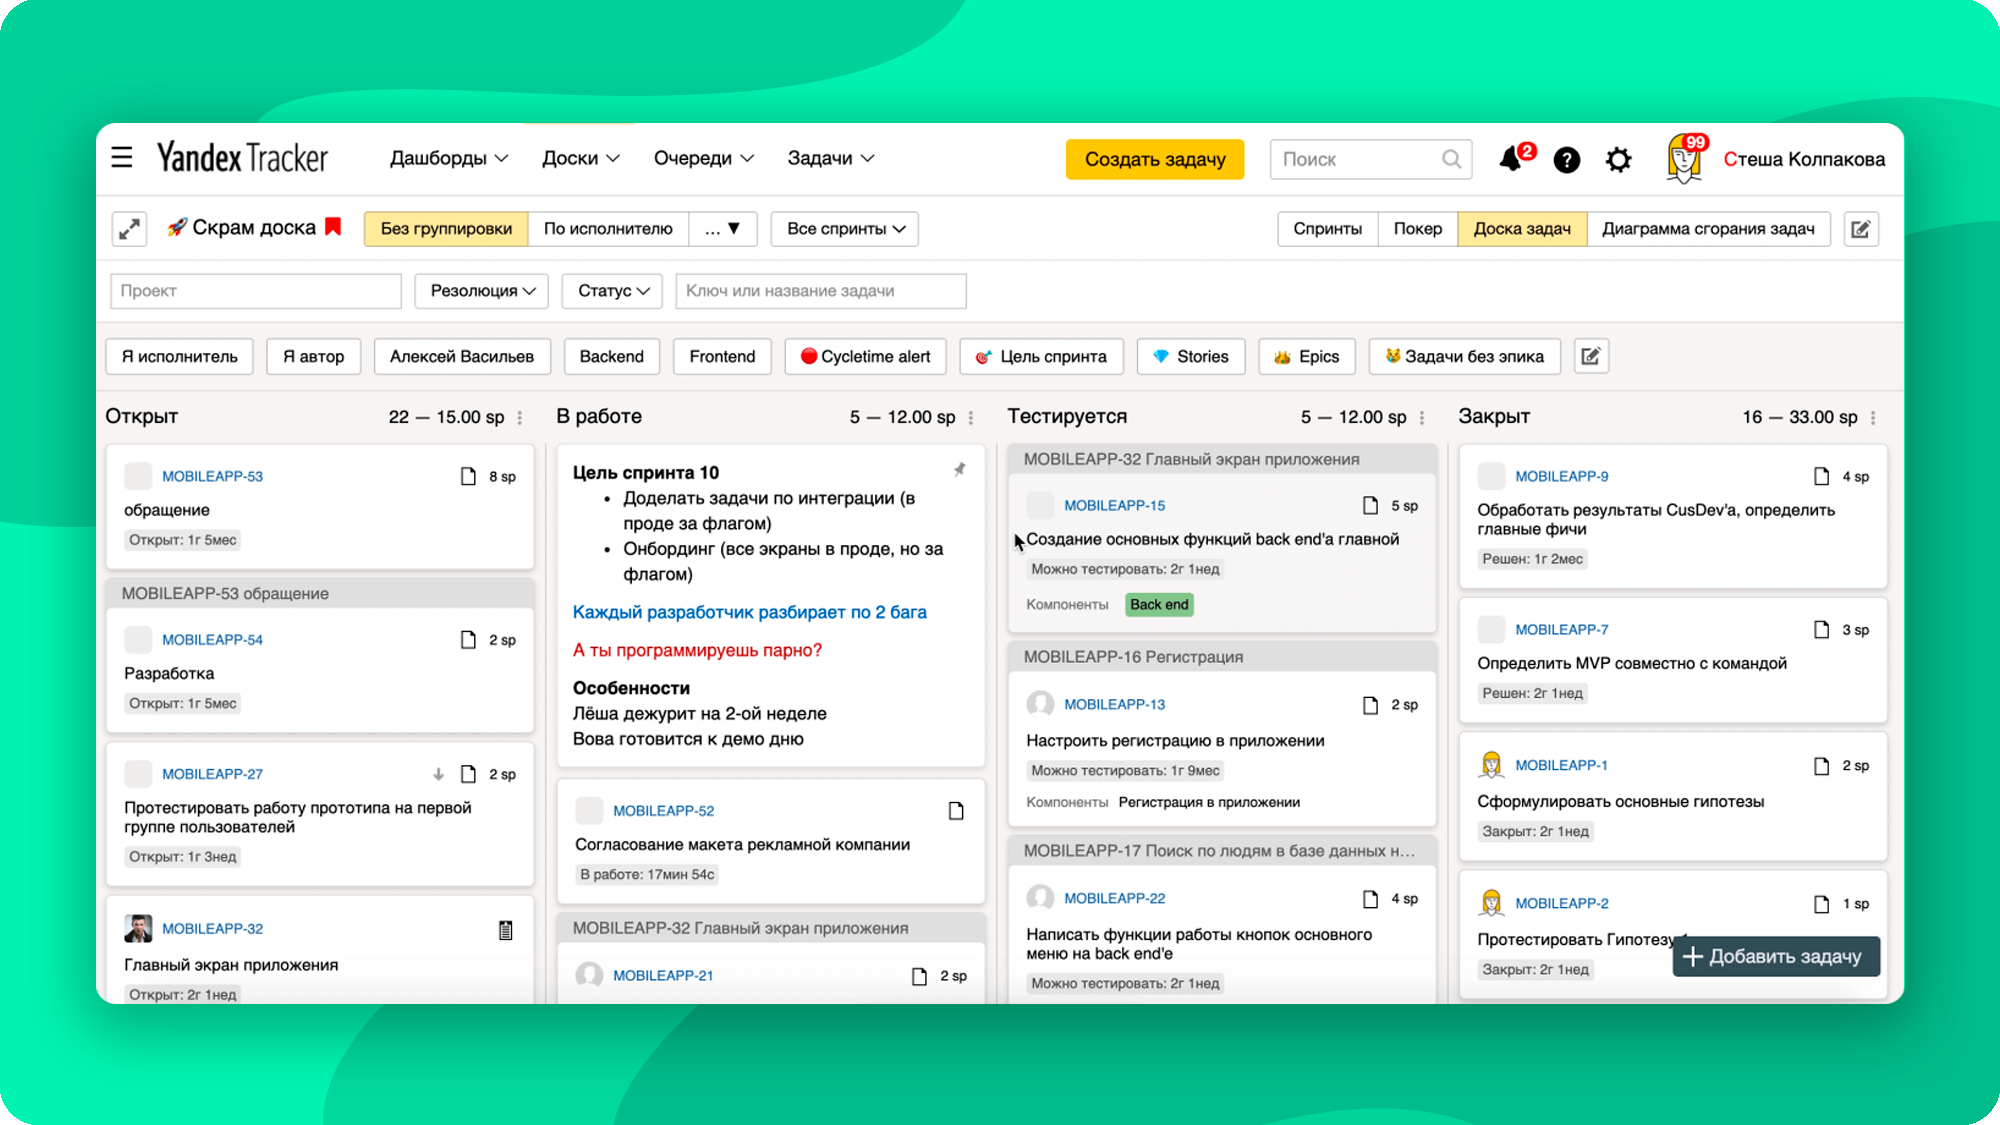 Канбан-доска в Яндекс.трекере